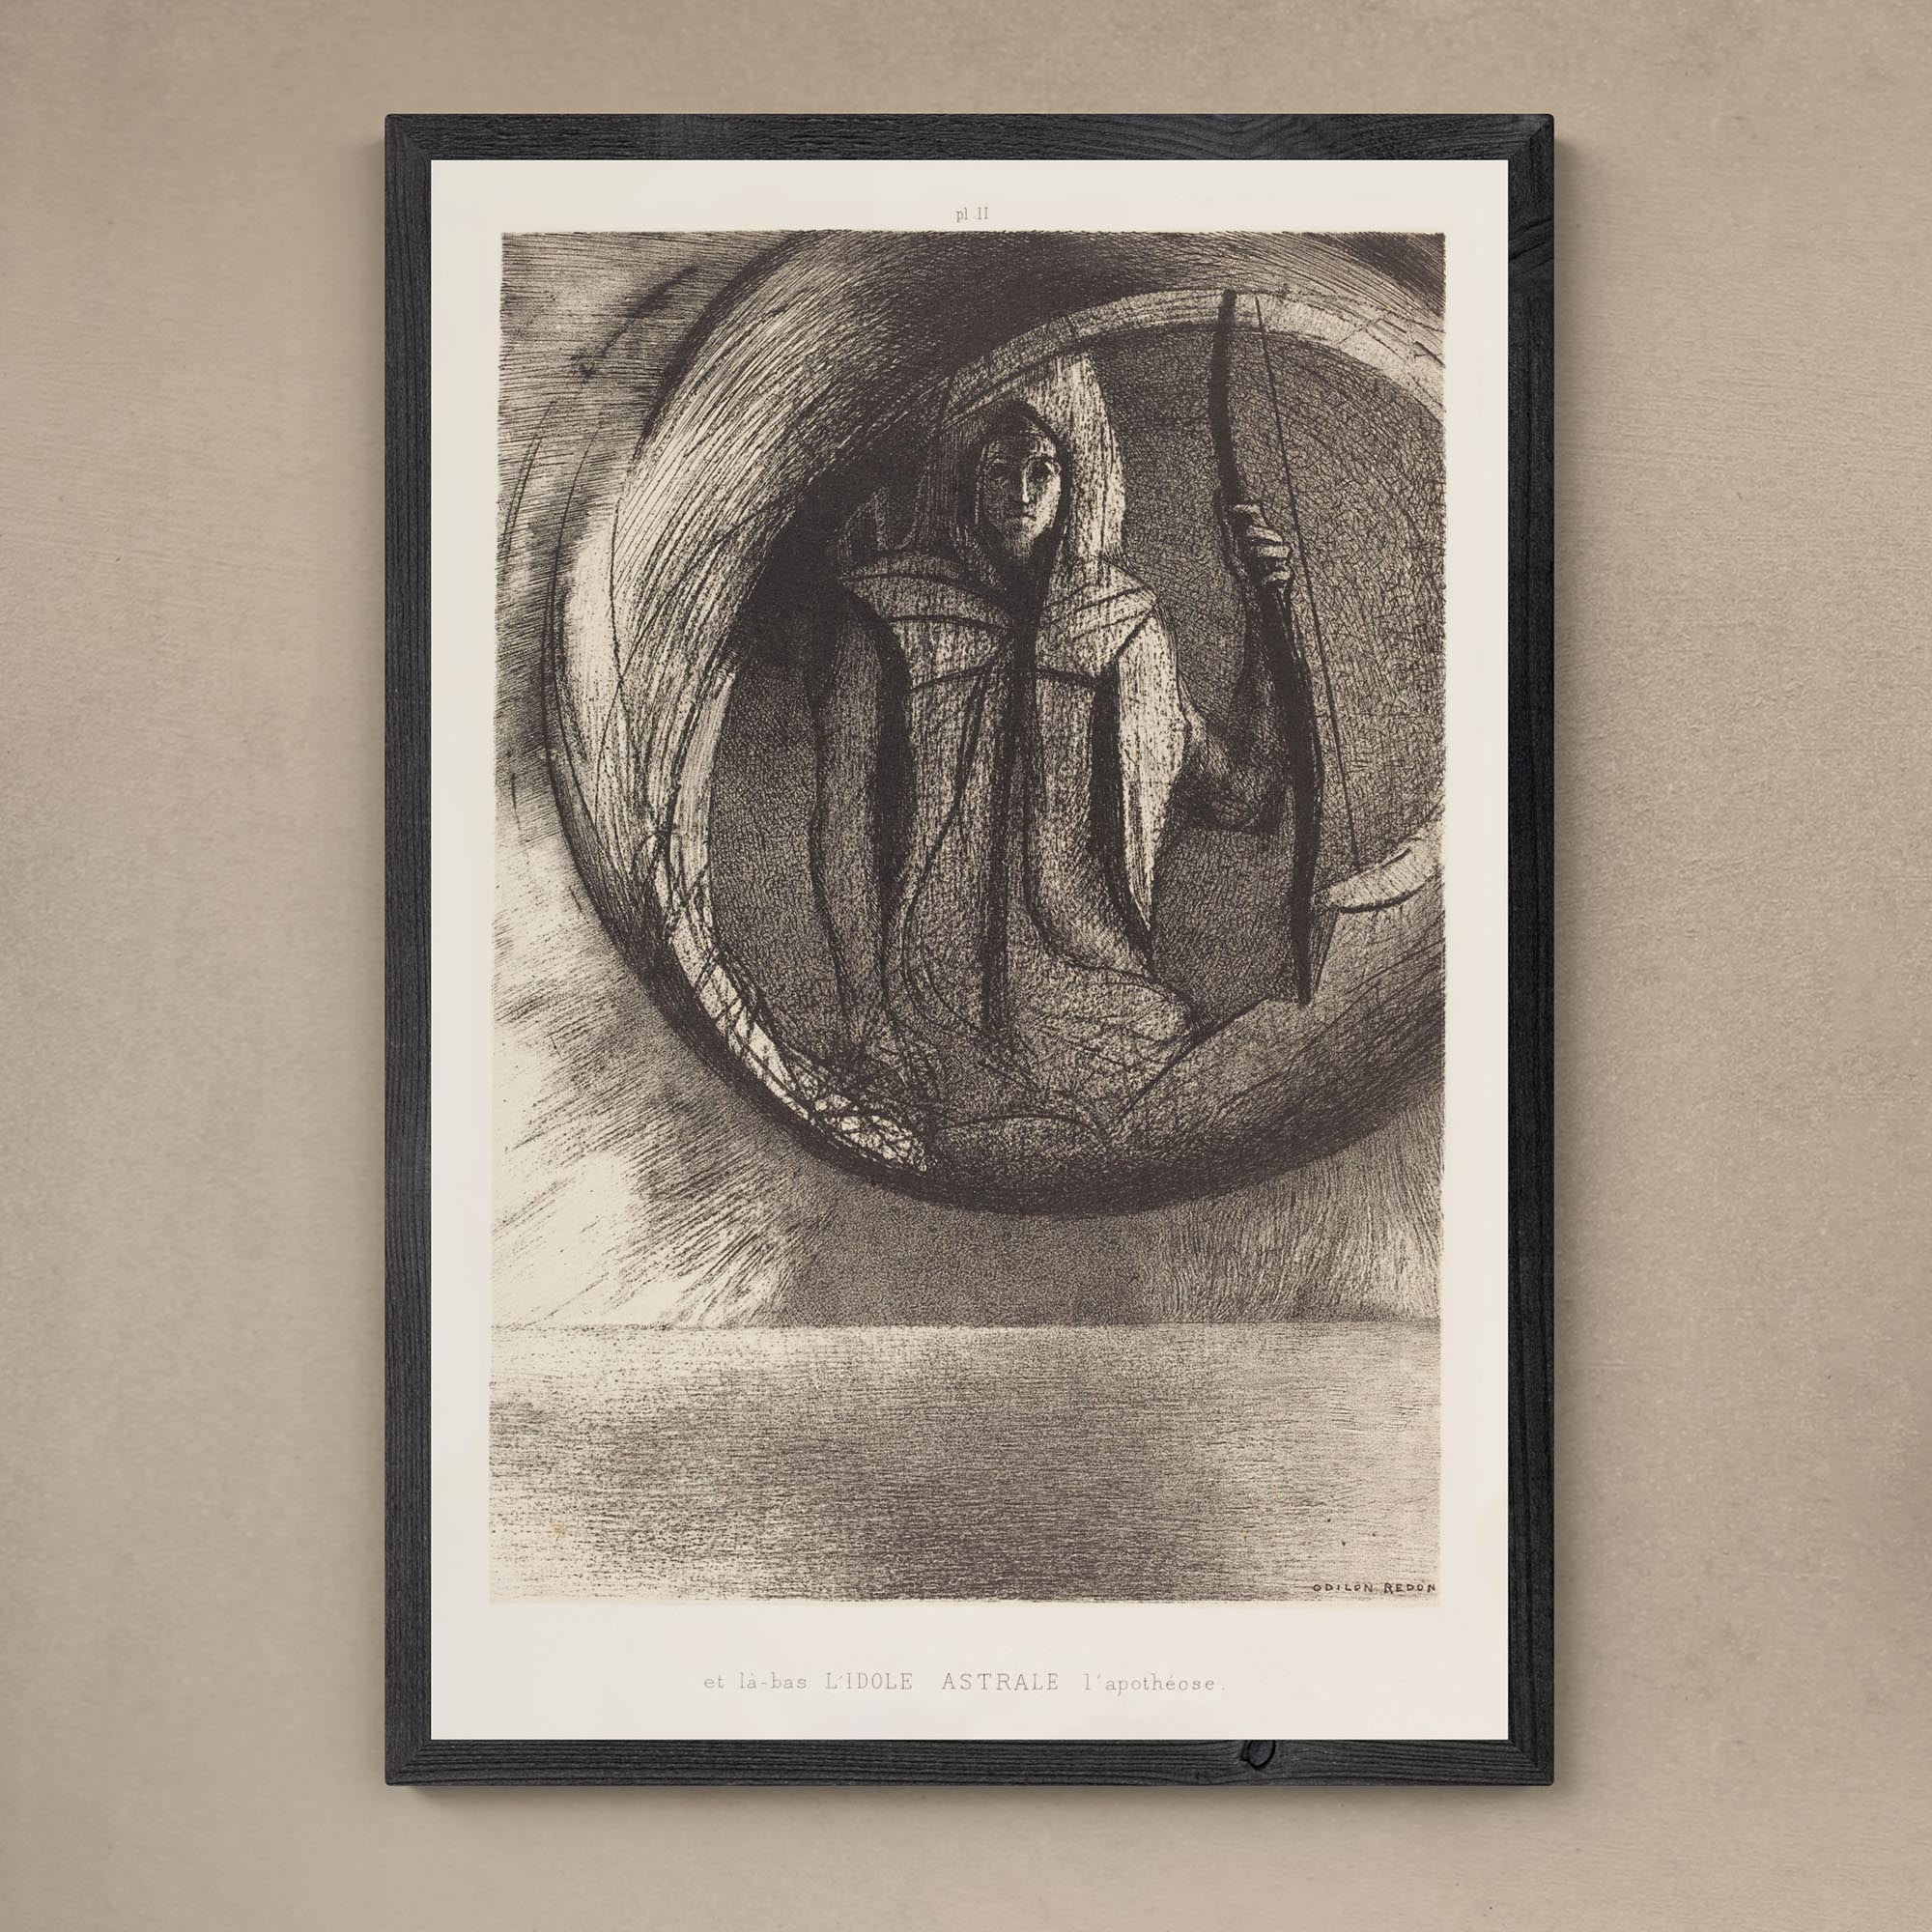 giclee 4"x6" Odilon Redon And Beyond, the Astral Idol, the Apotheosis Fine Art Print